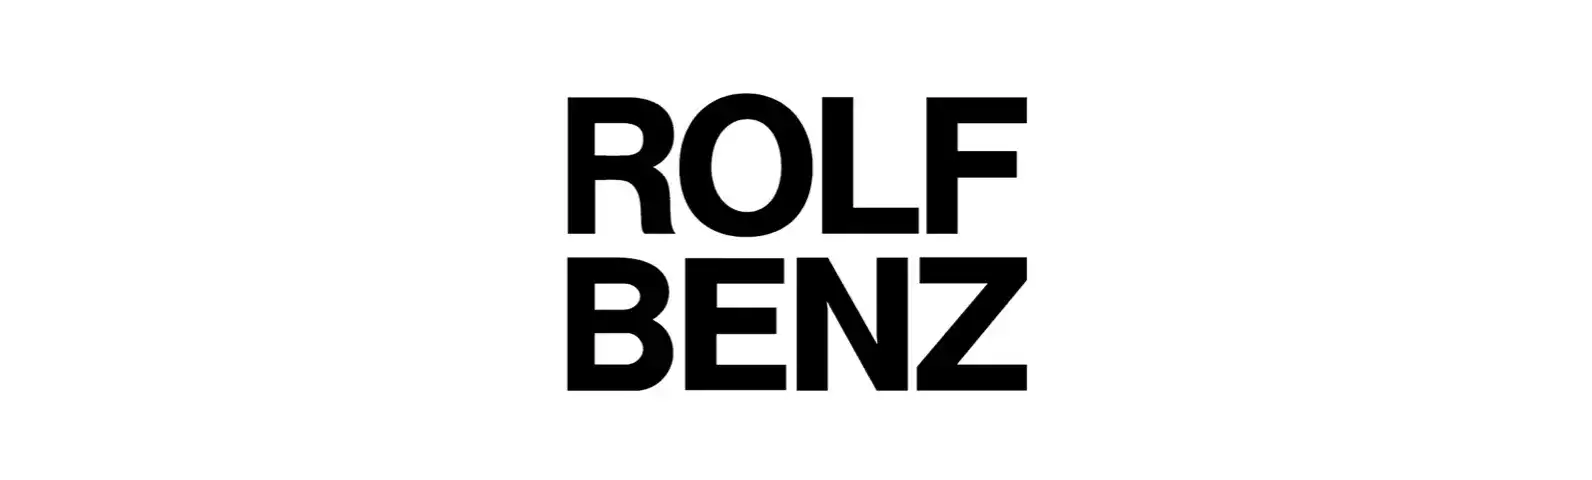 news_Rolf_Benz 03.webp